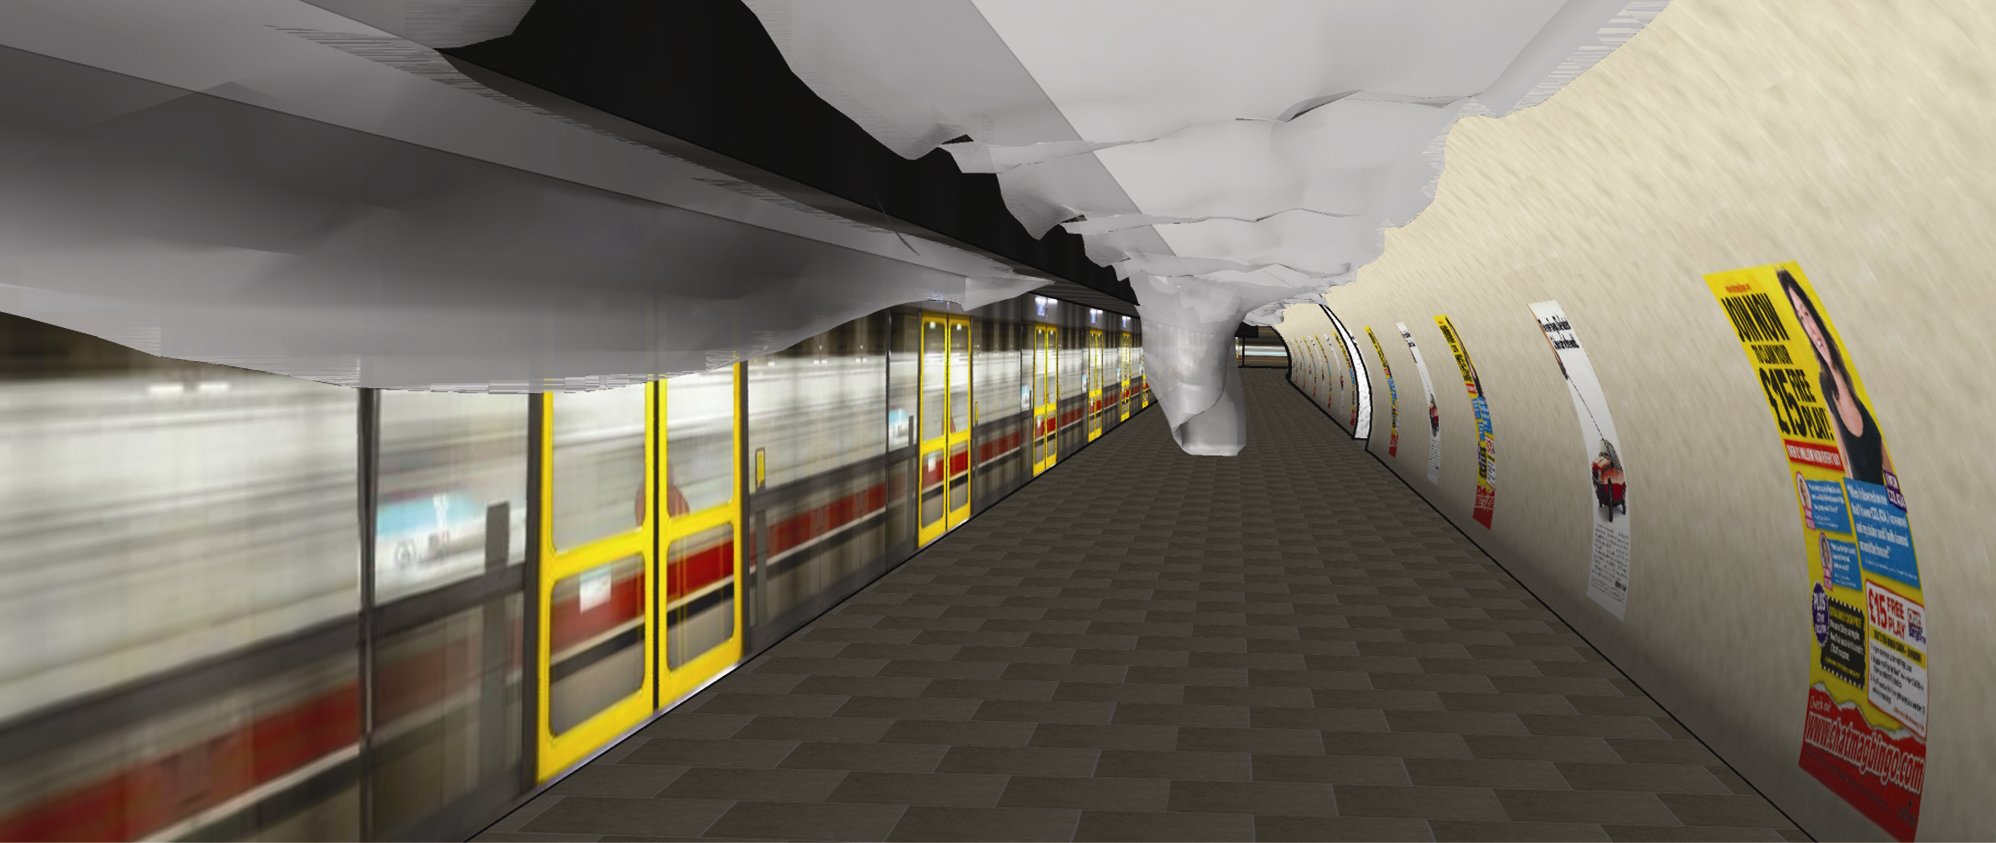 Computer generated image of smoke movement on an underground train platform.